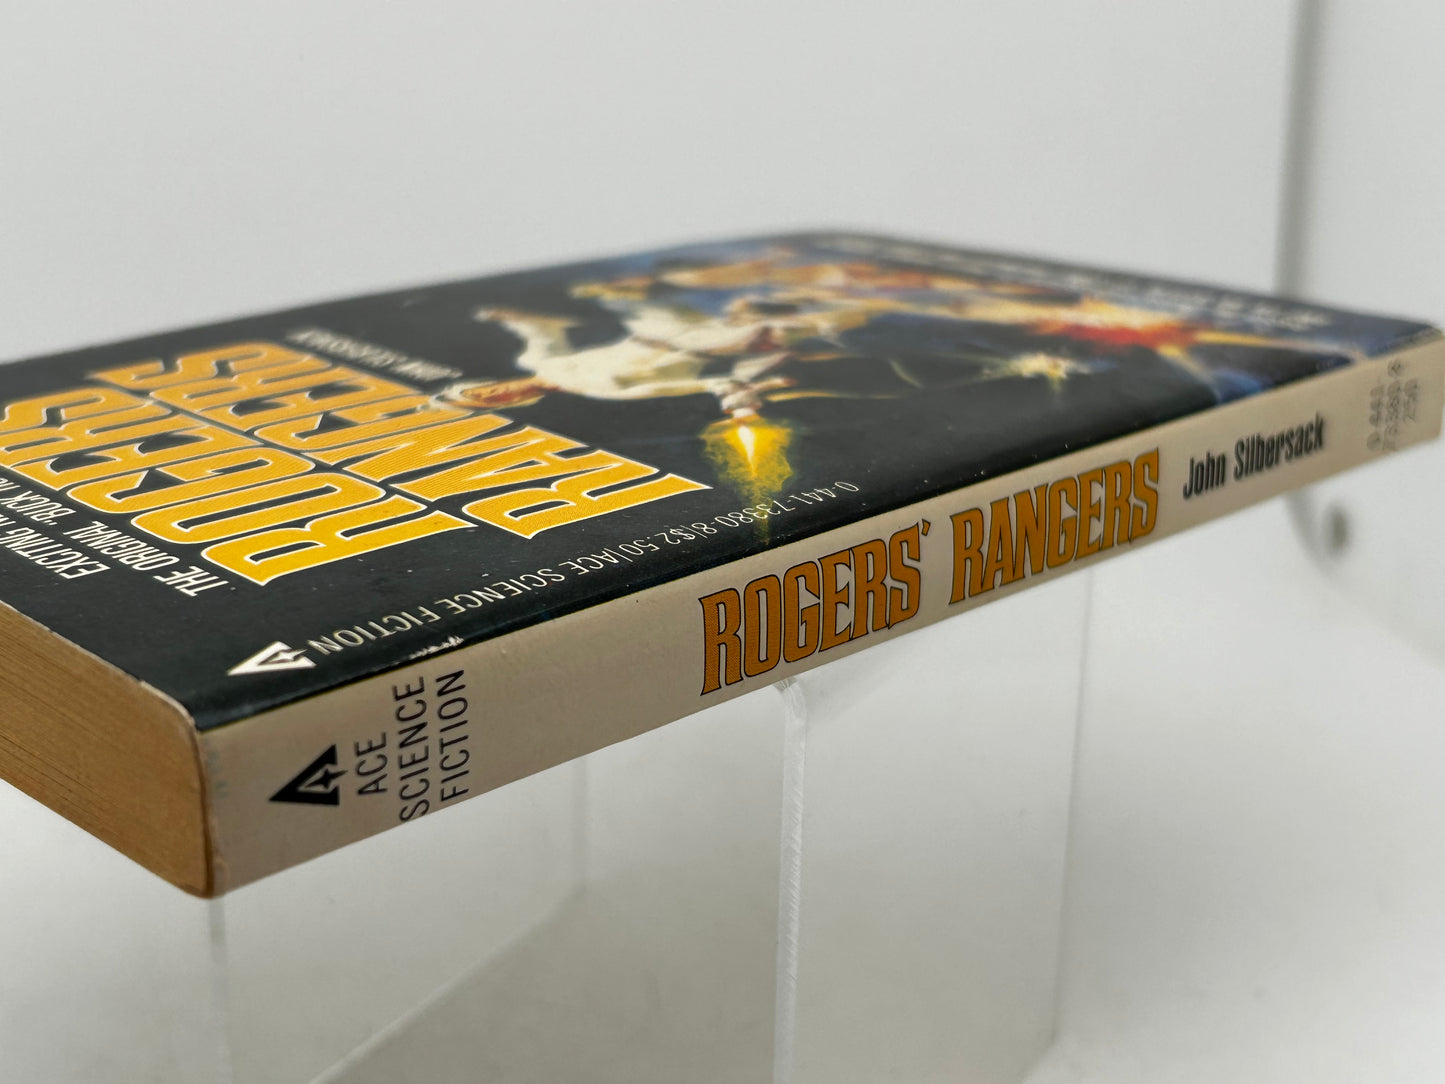 Rogers' Rangers ACE Paperback John Silbersack SF11